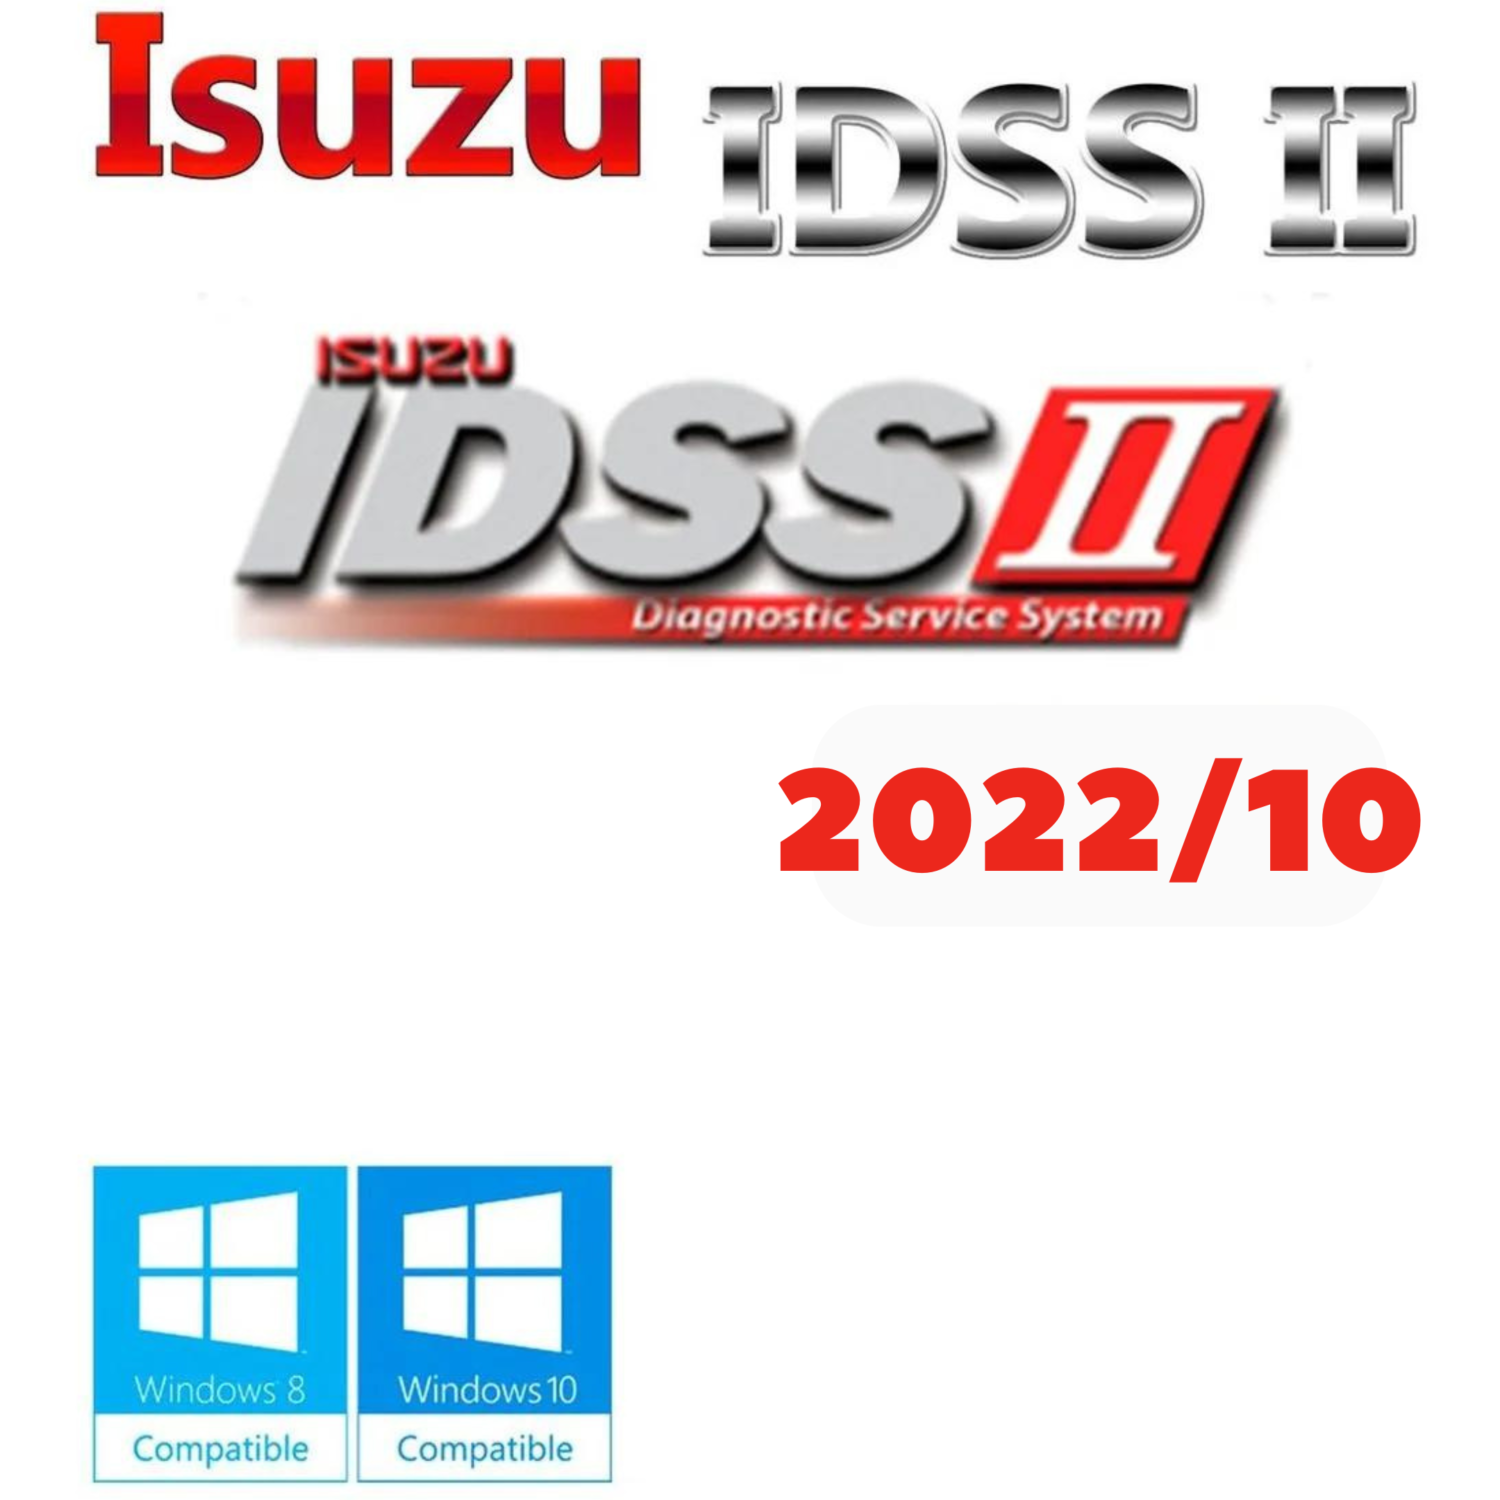 Sistema de servicio de diagnóstico ISUZU US IDSS II 2022/12 para Nexiq USB Link